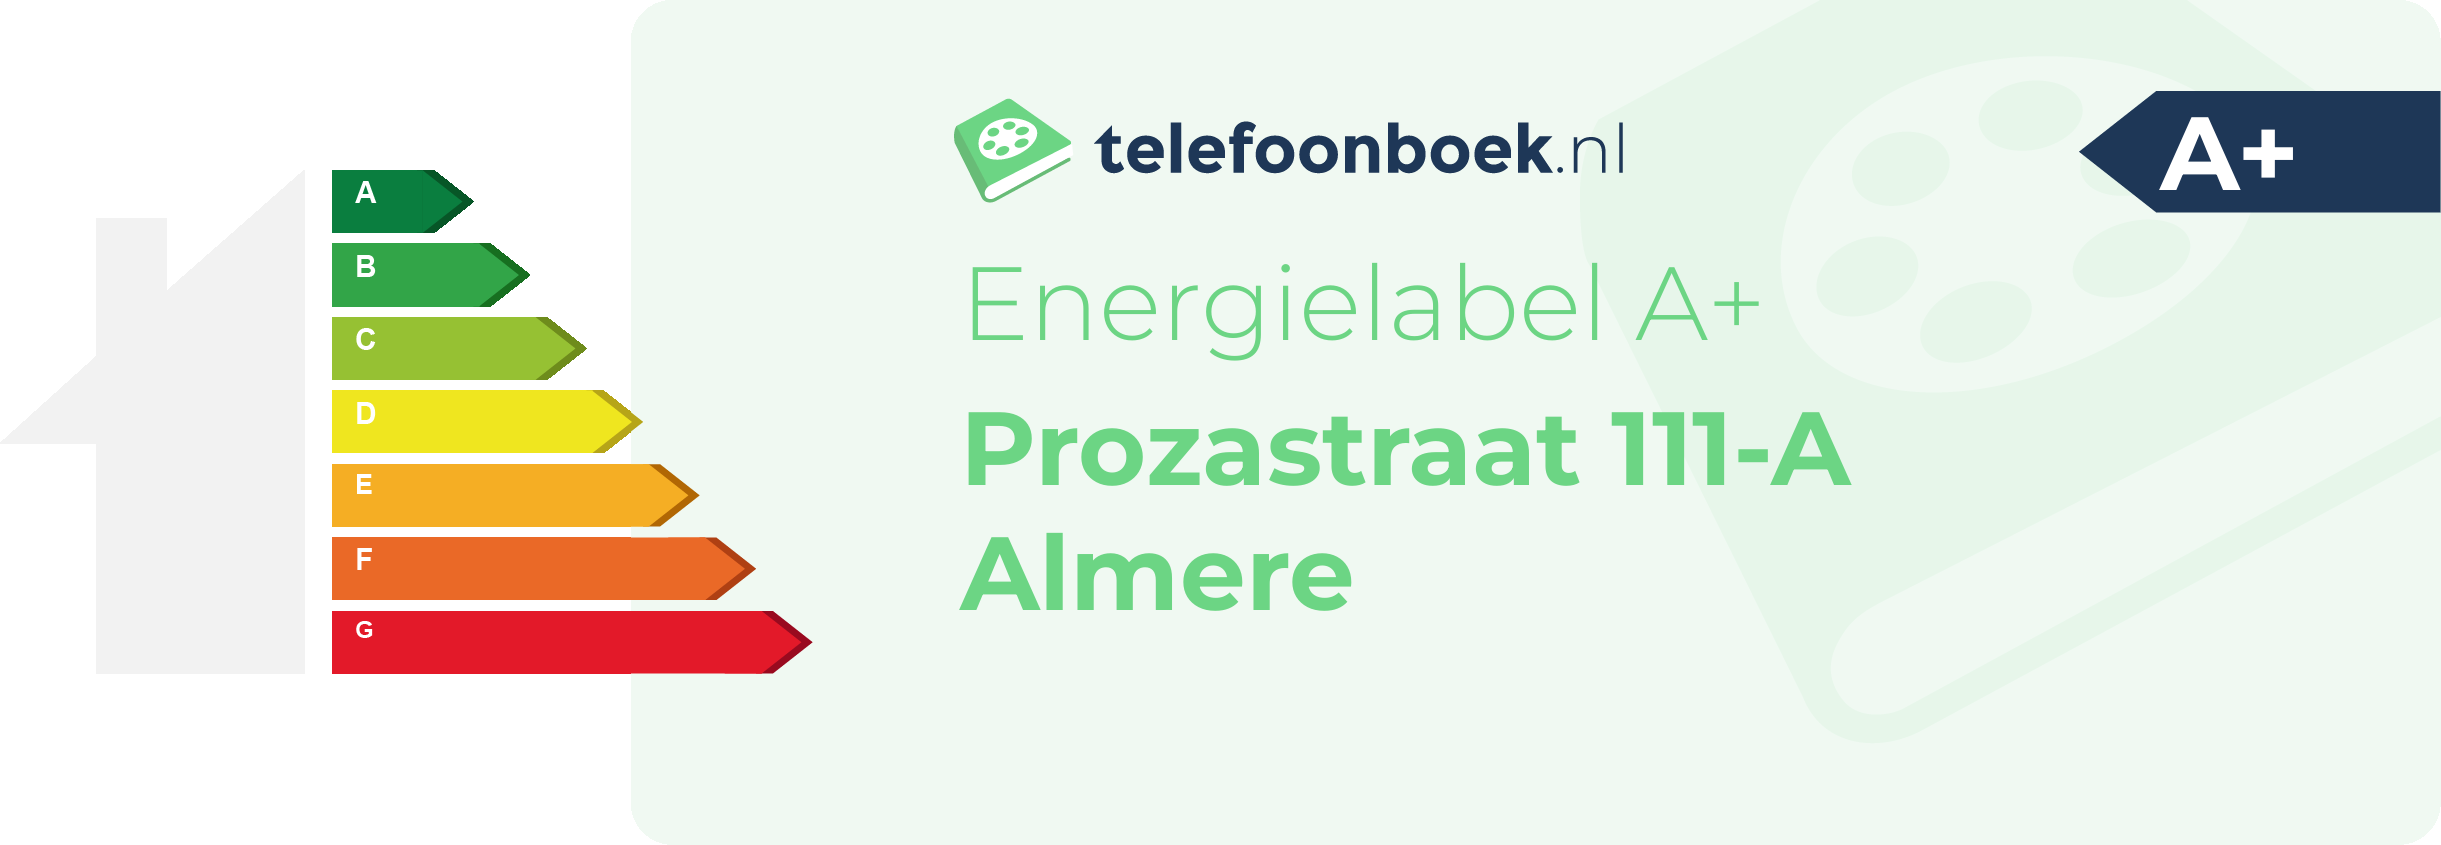 Energielabel Prozastraat 111-A Almere